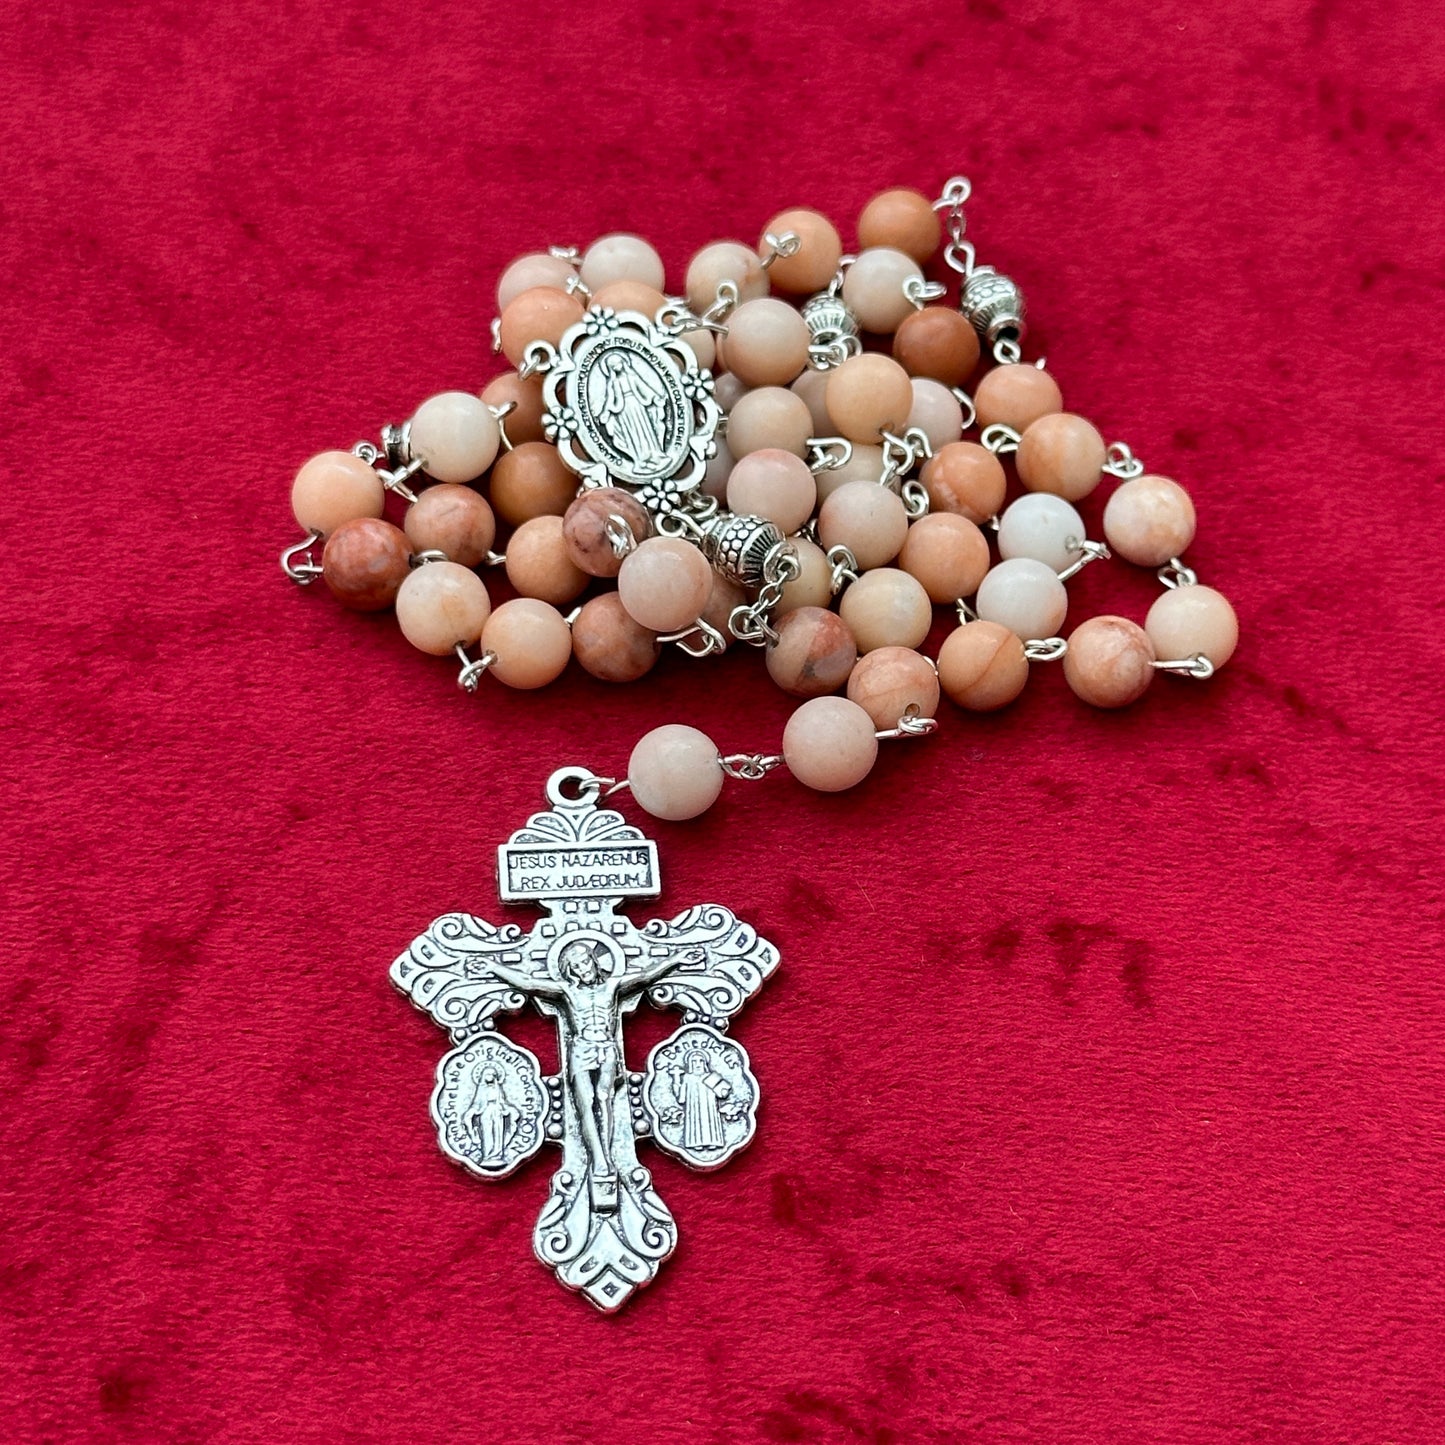 Traditional Catholic Rosary Beads